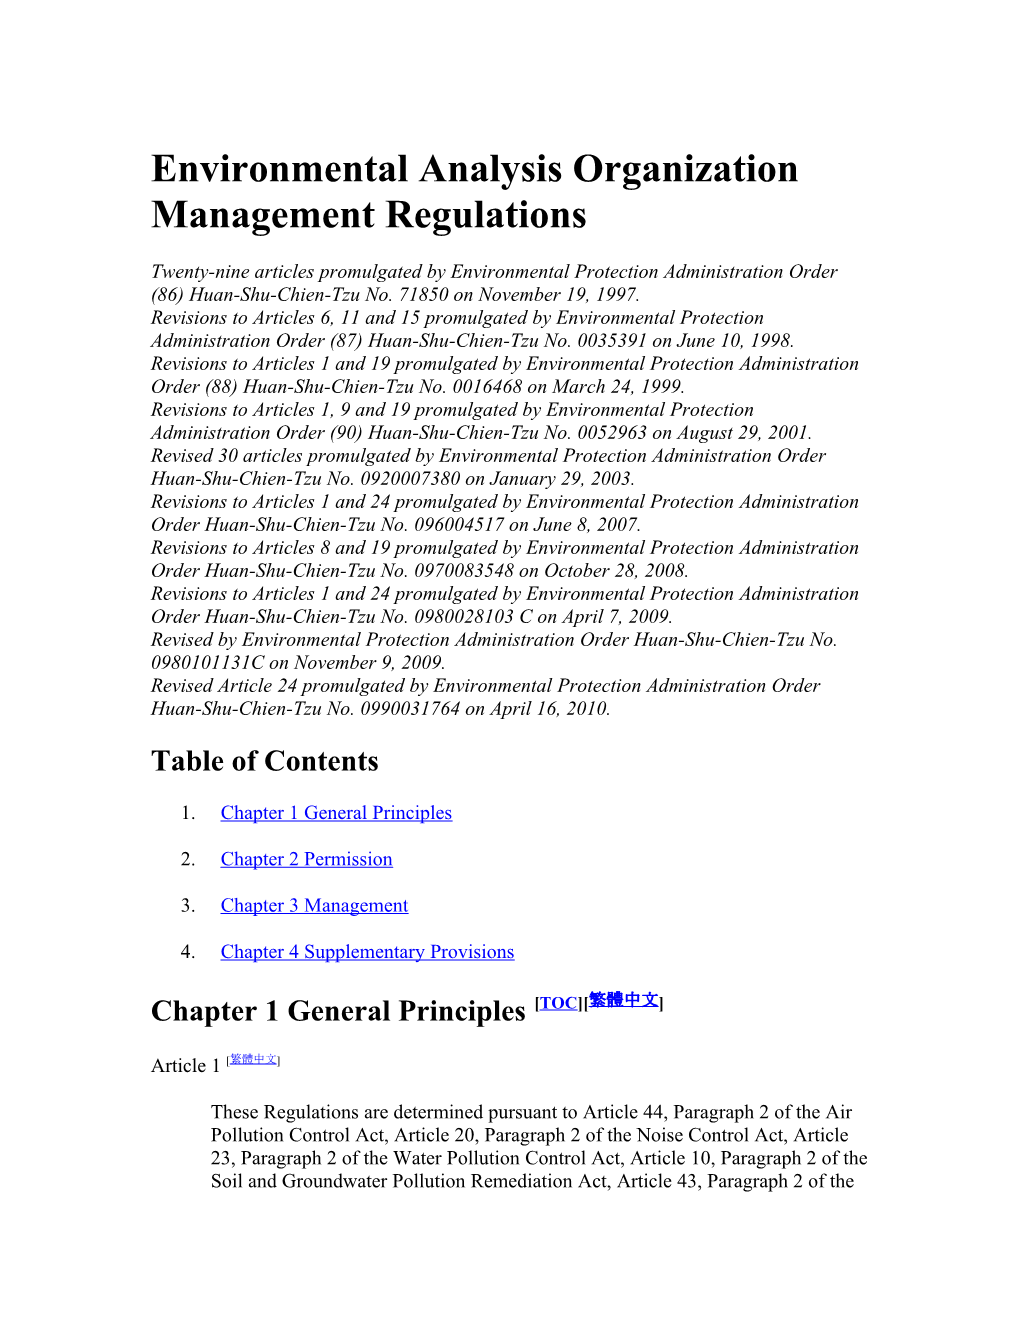 Environmental Analysis Organization Management Regulations